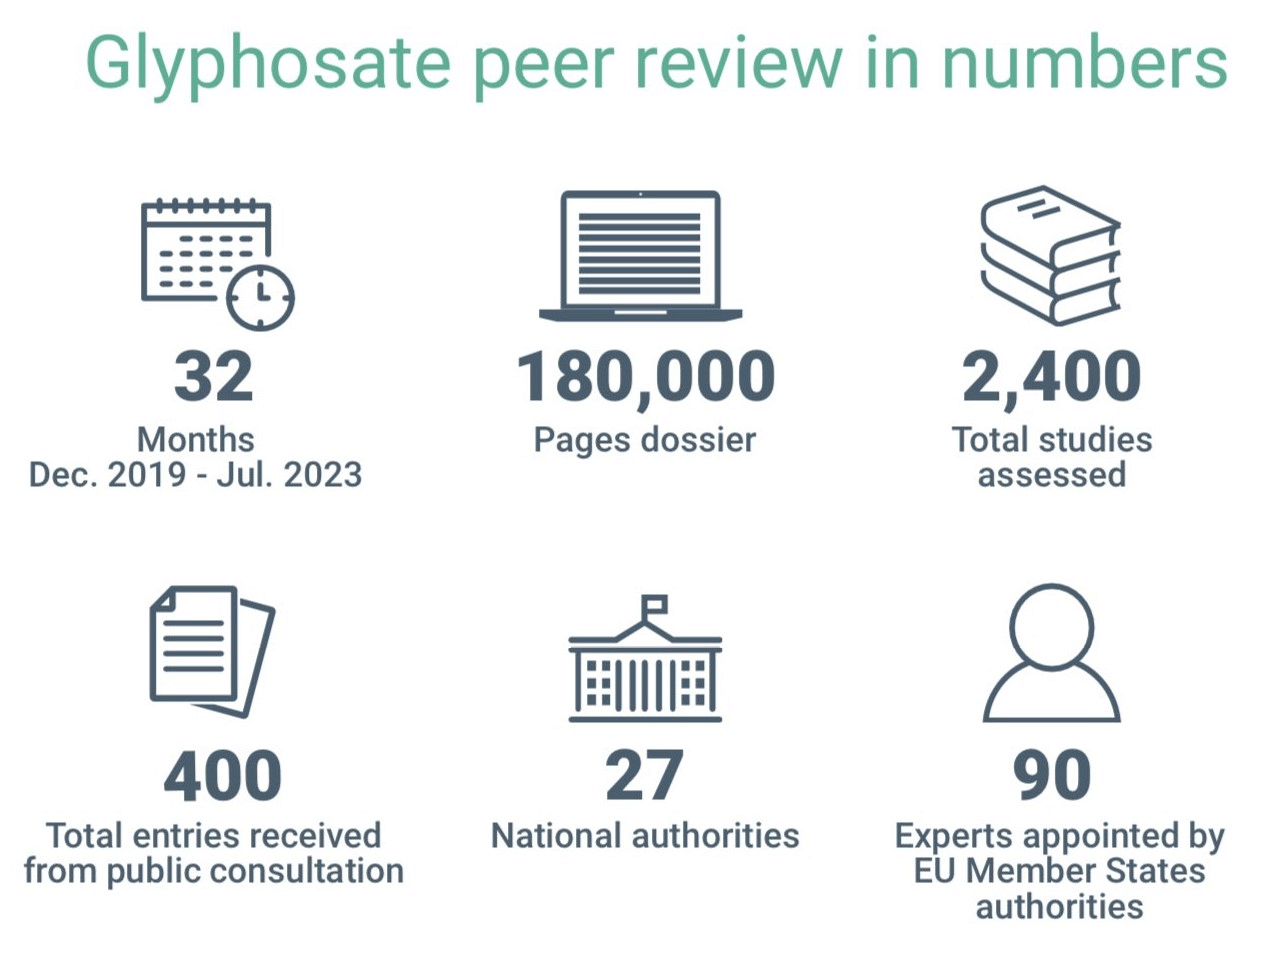 EFSA glyphosate review finds no critical concerns